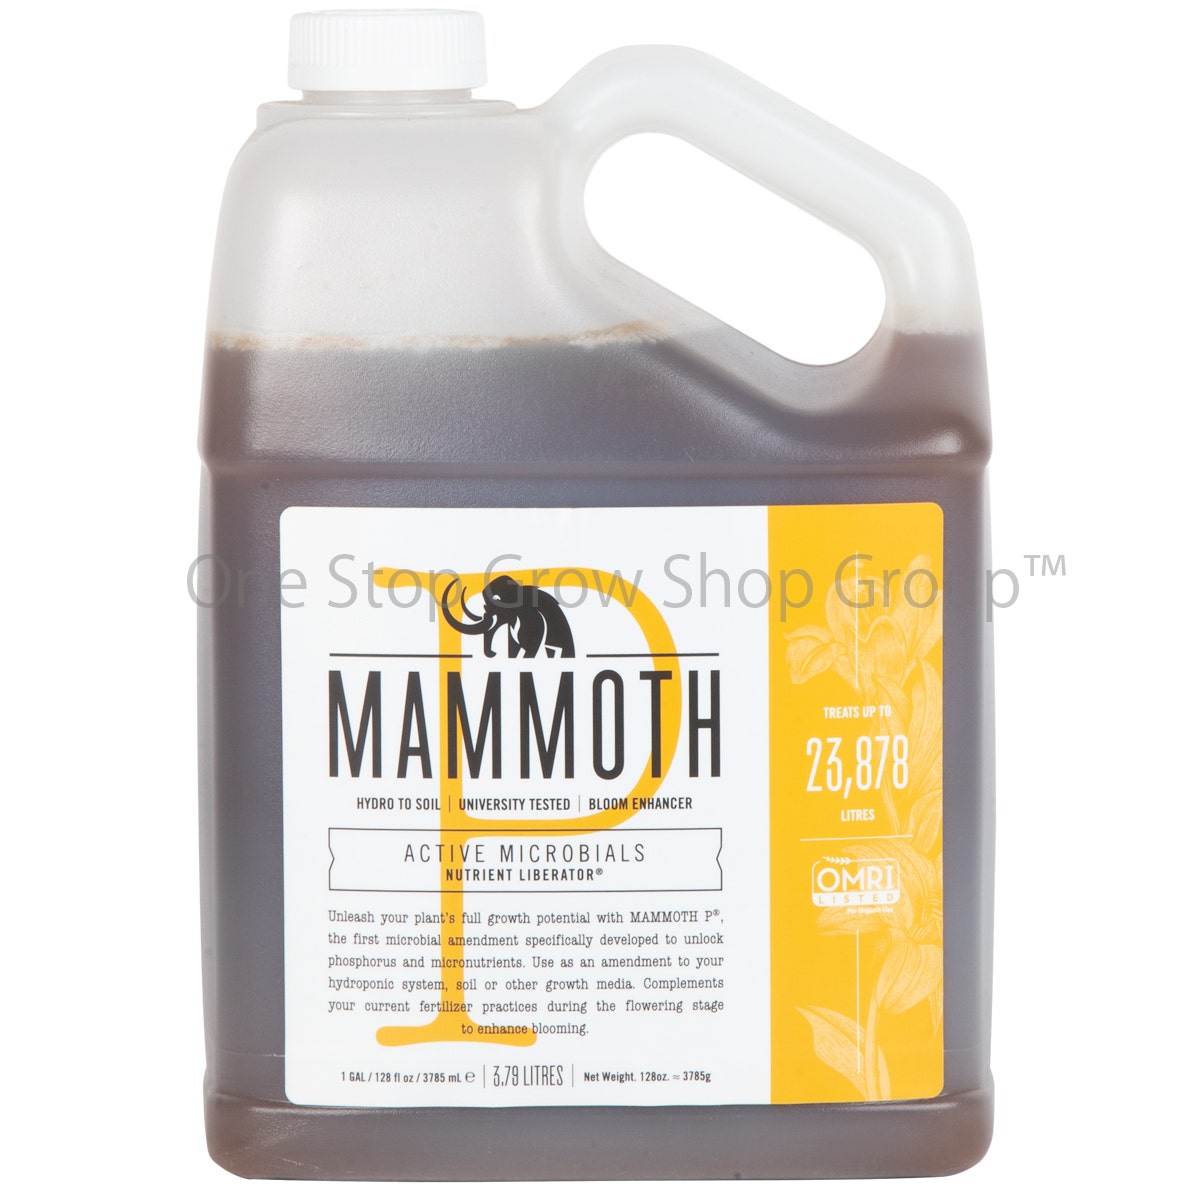 Mammoth P - Microbial Inoculant